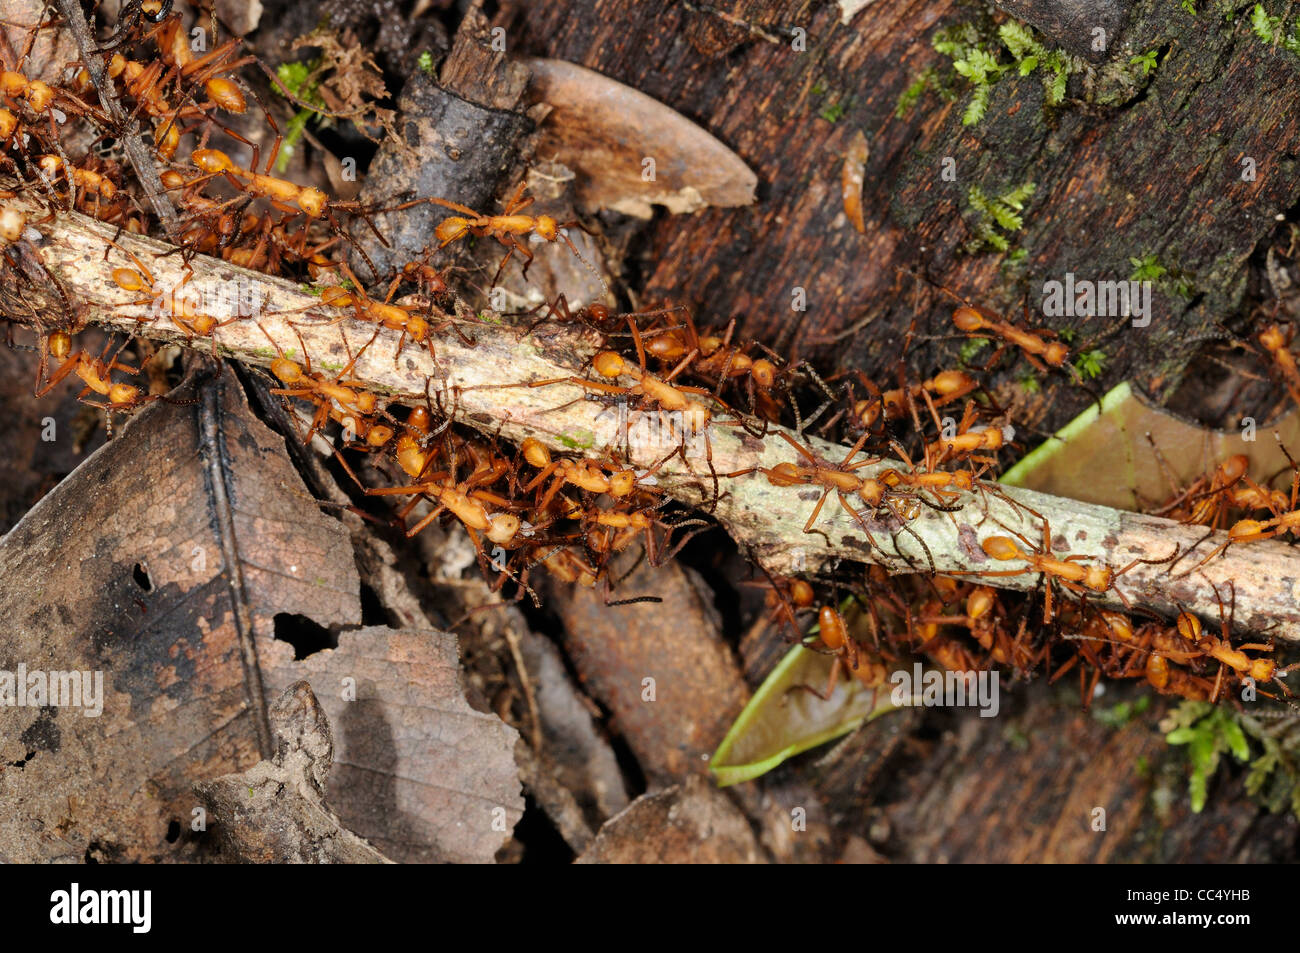 Red Army Ant (Eciton species) Rupununi, Guyana Stock Photo